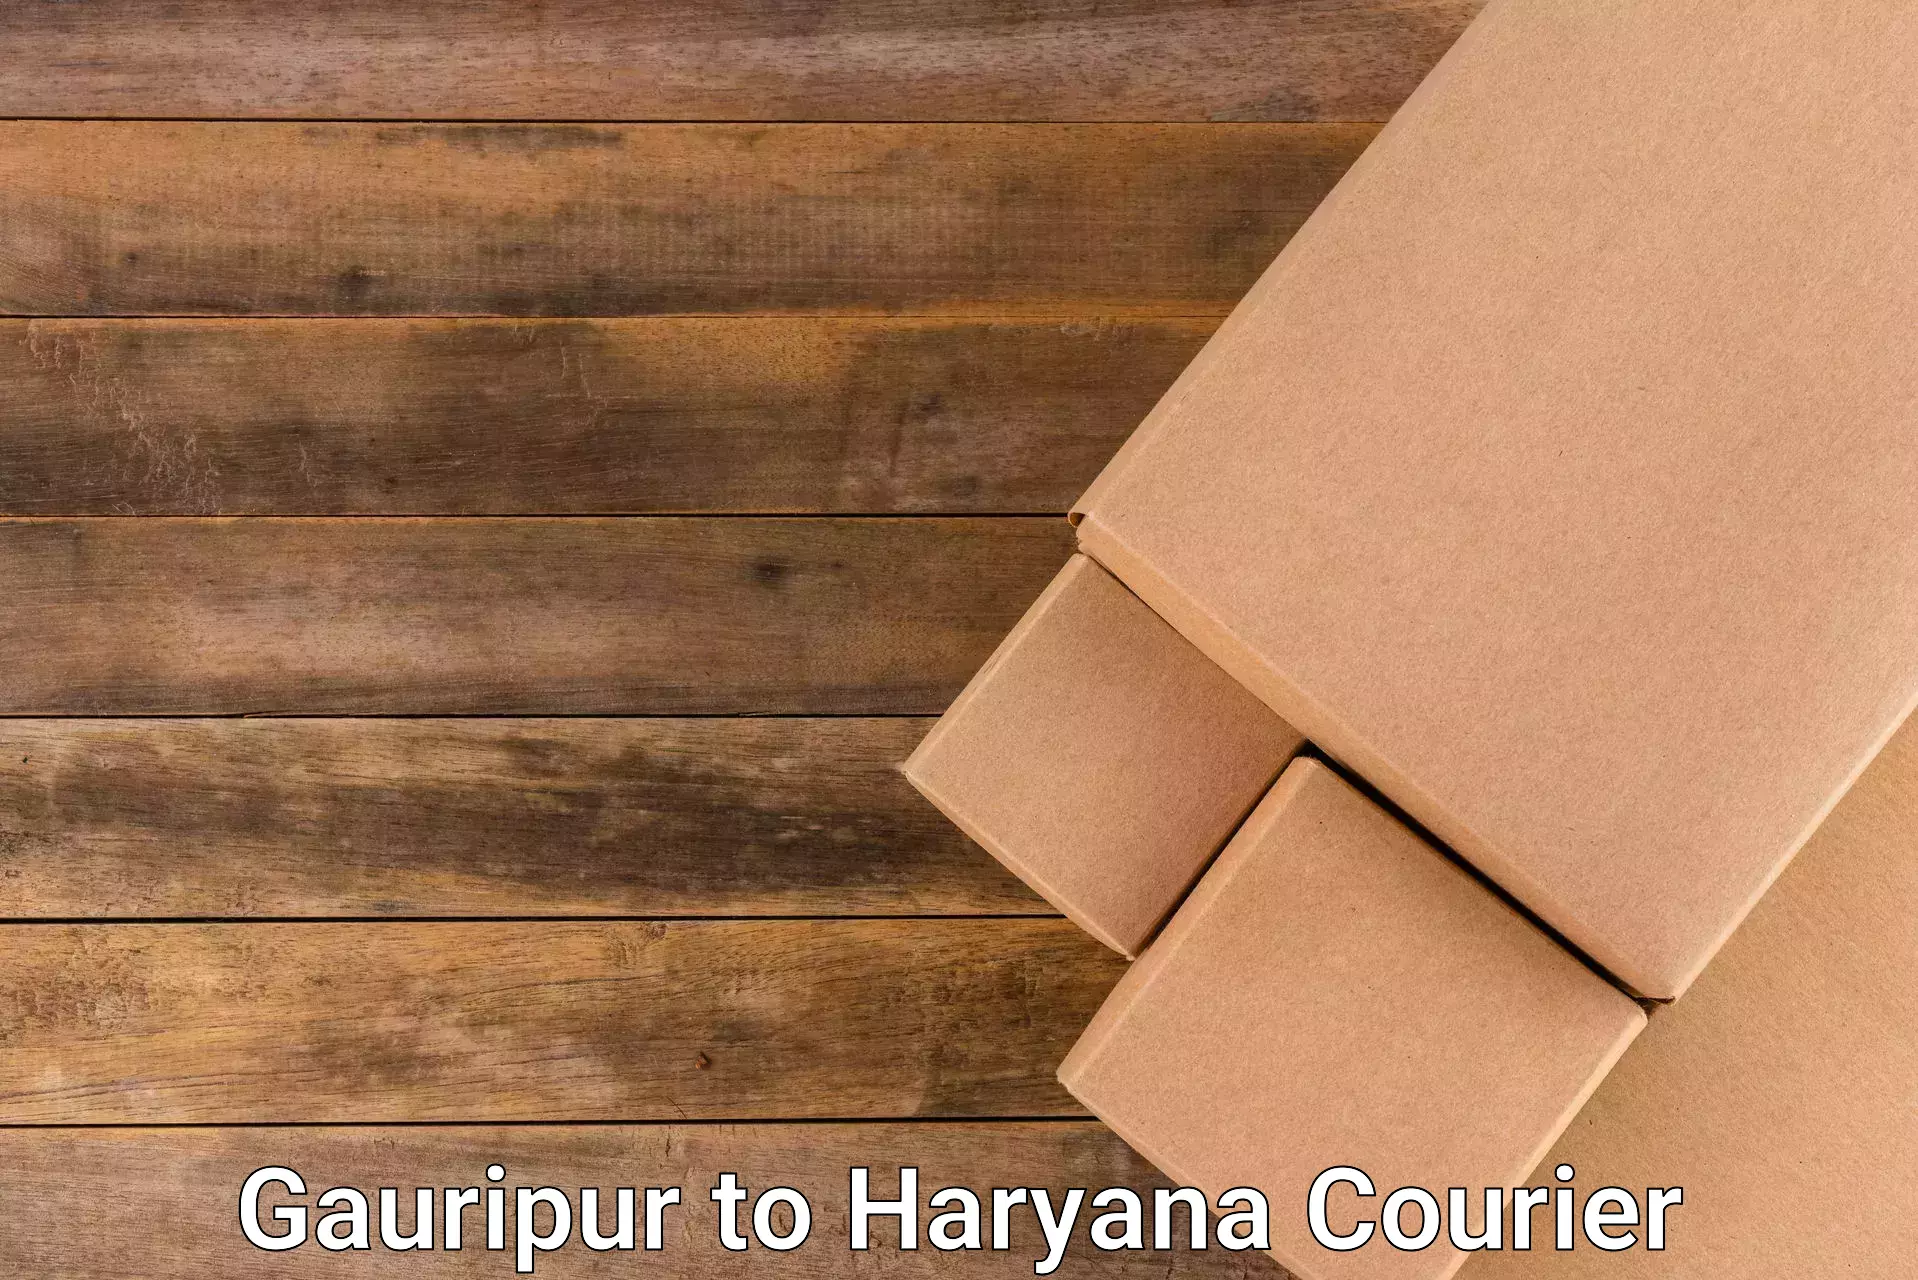 Professional courier handling Gauripur to Mandi Dabwali